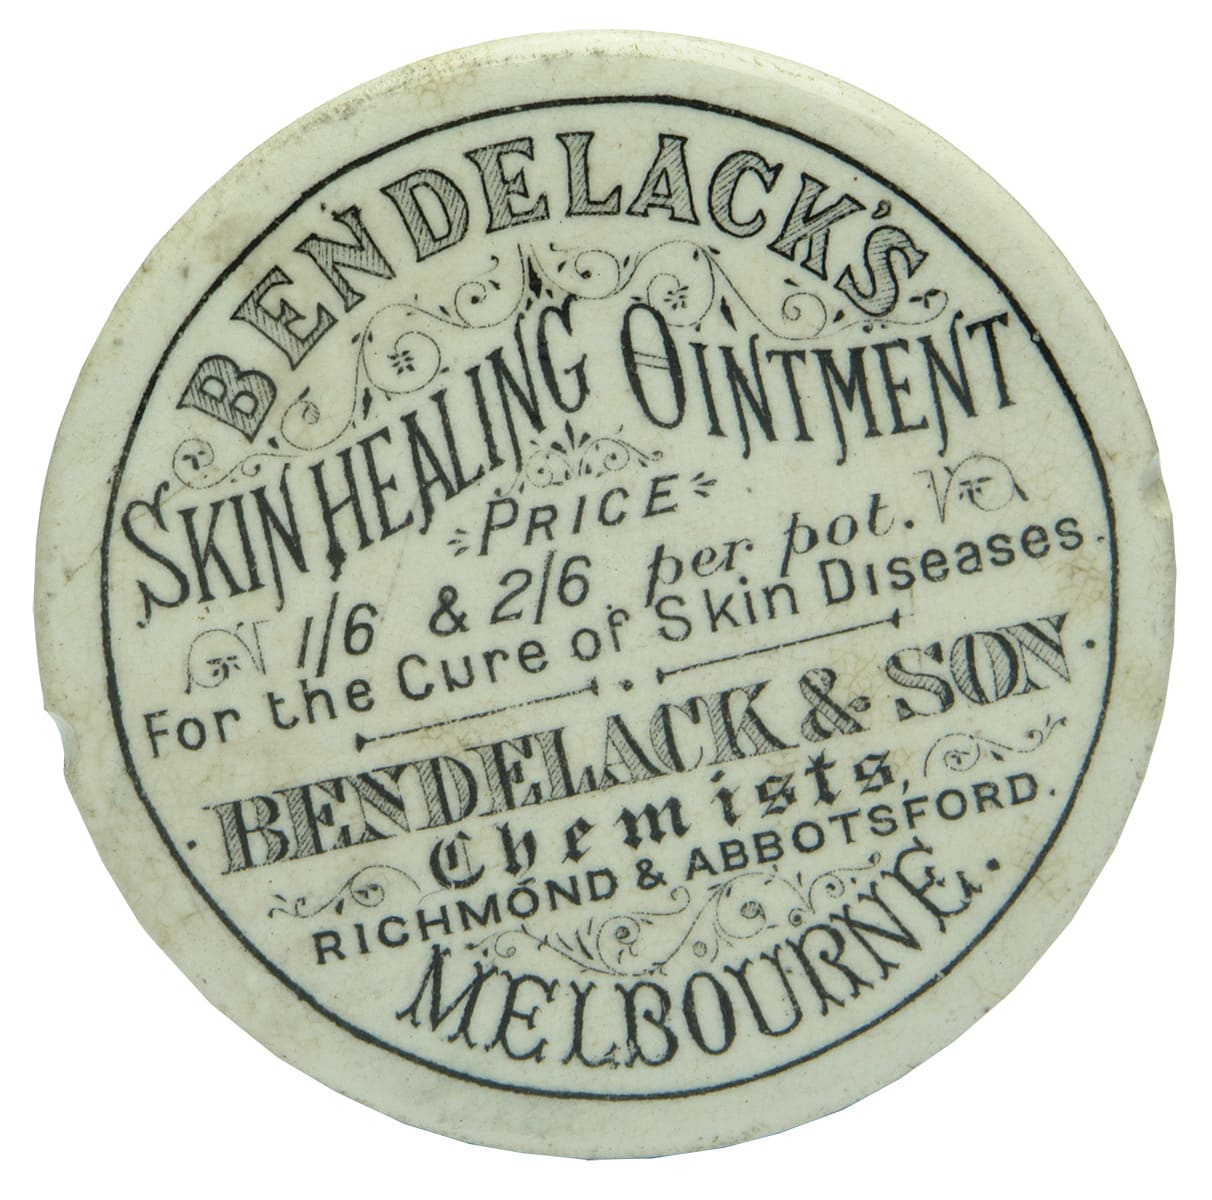 Bendelack's Skin Healing Ointment Abbotsford Richmond Pot Lid